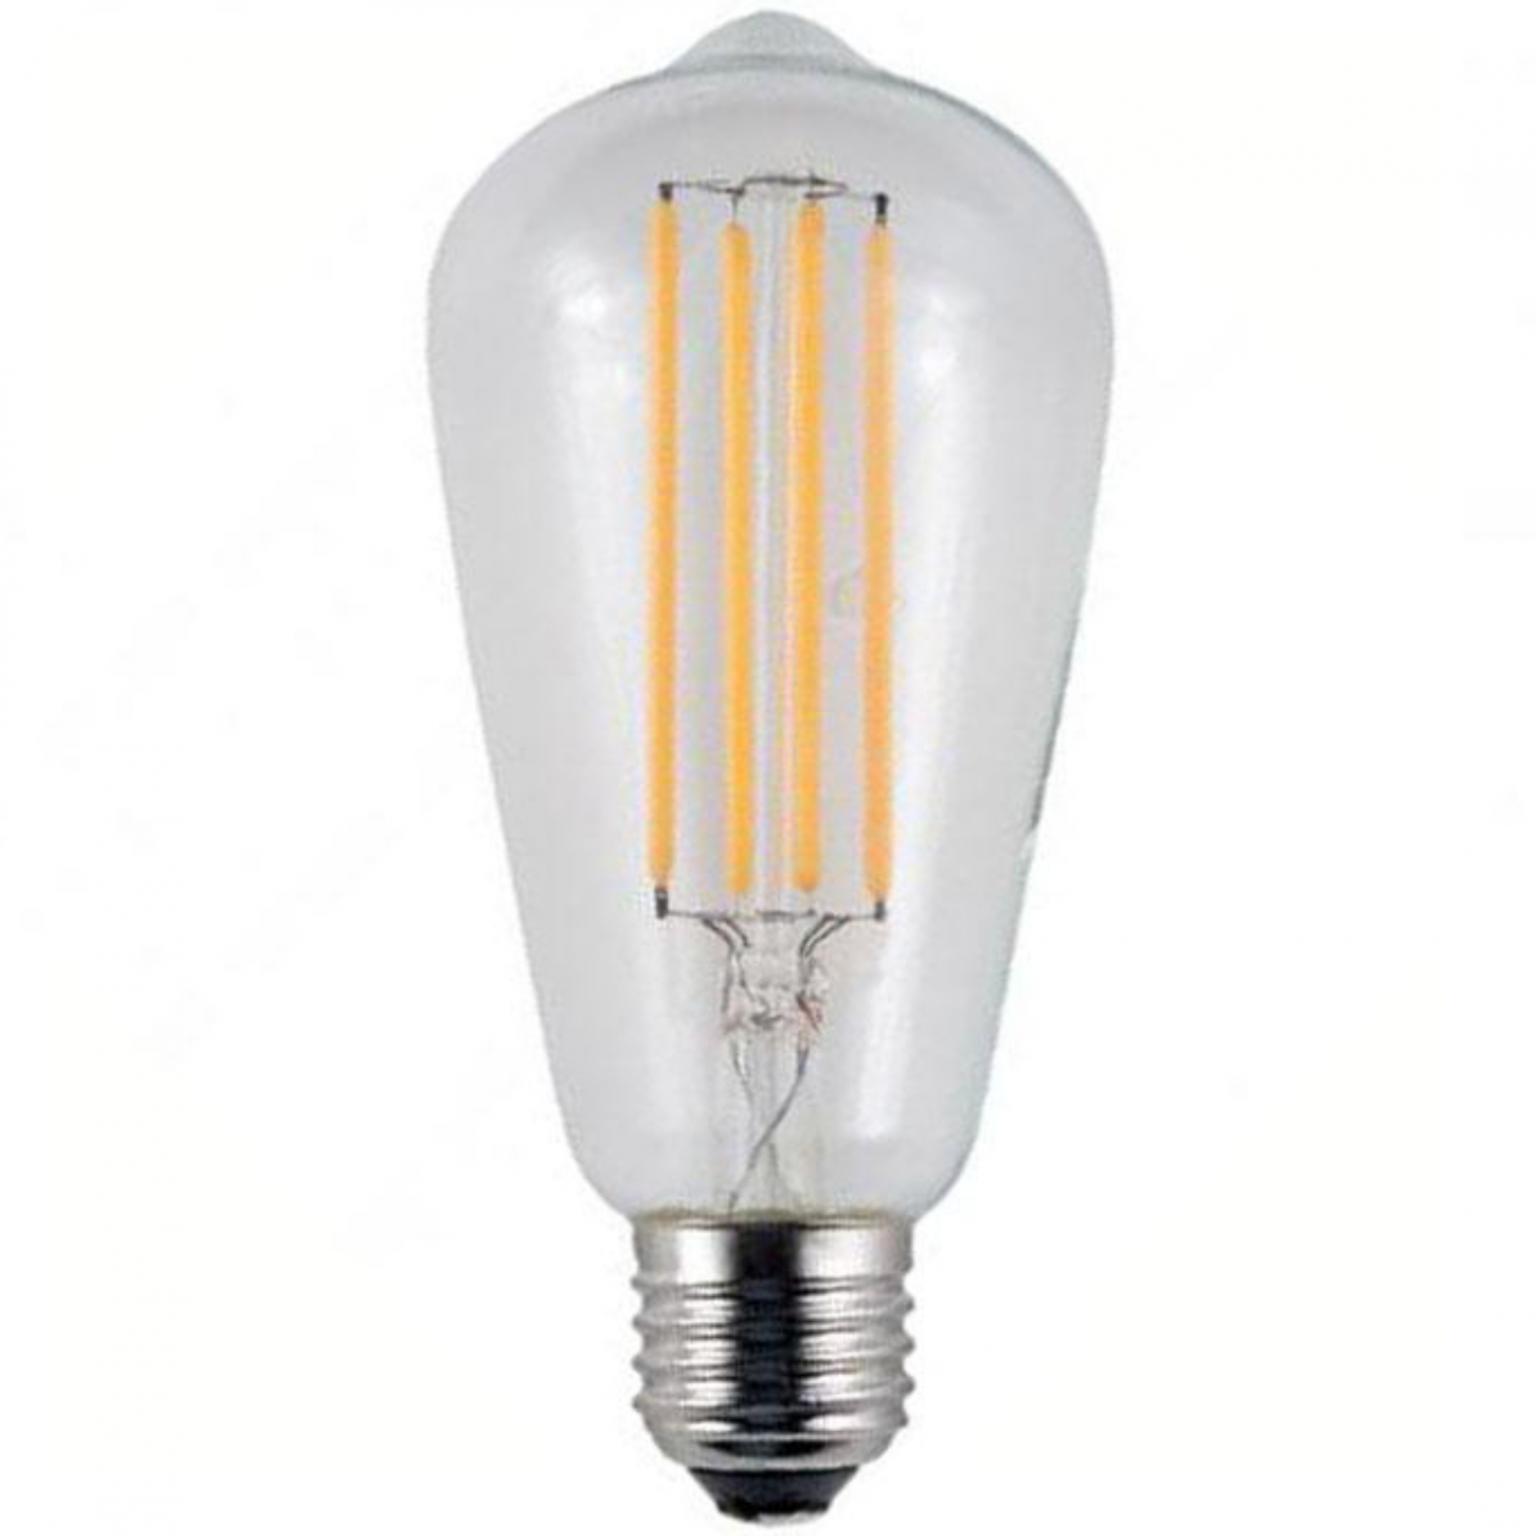 Filament LED Lamp - E27 Watt Lamptype: E27 - Led, Vermogen: 4.5 Watt - 230 Volt, Lichtsterkte: 320 lumen, Afmetingen: Ø64mm/H143mm, Lichtkleur: Extra warm wit 2200 K.